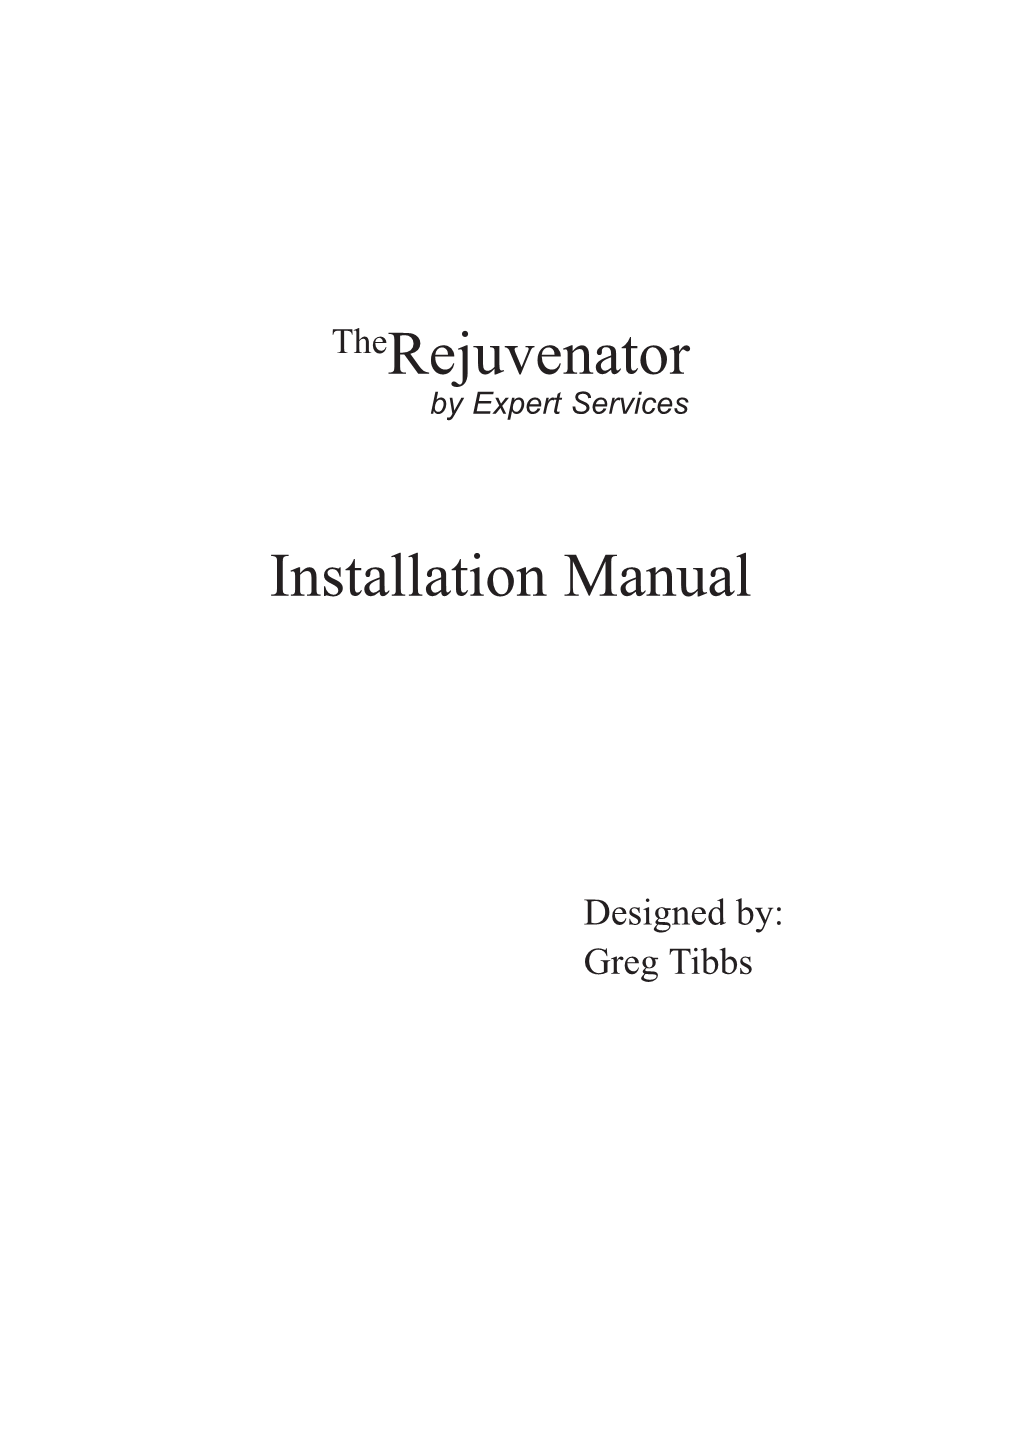 Therejuvenator Installation Manual